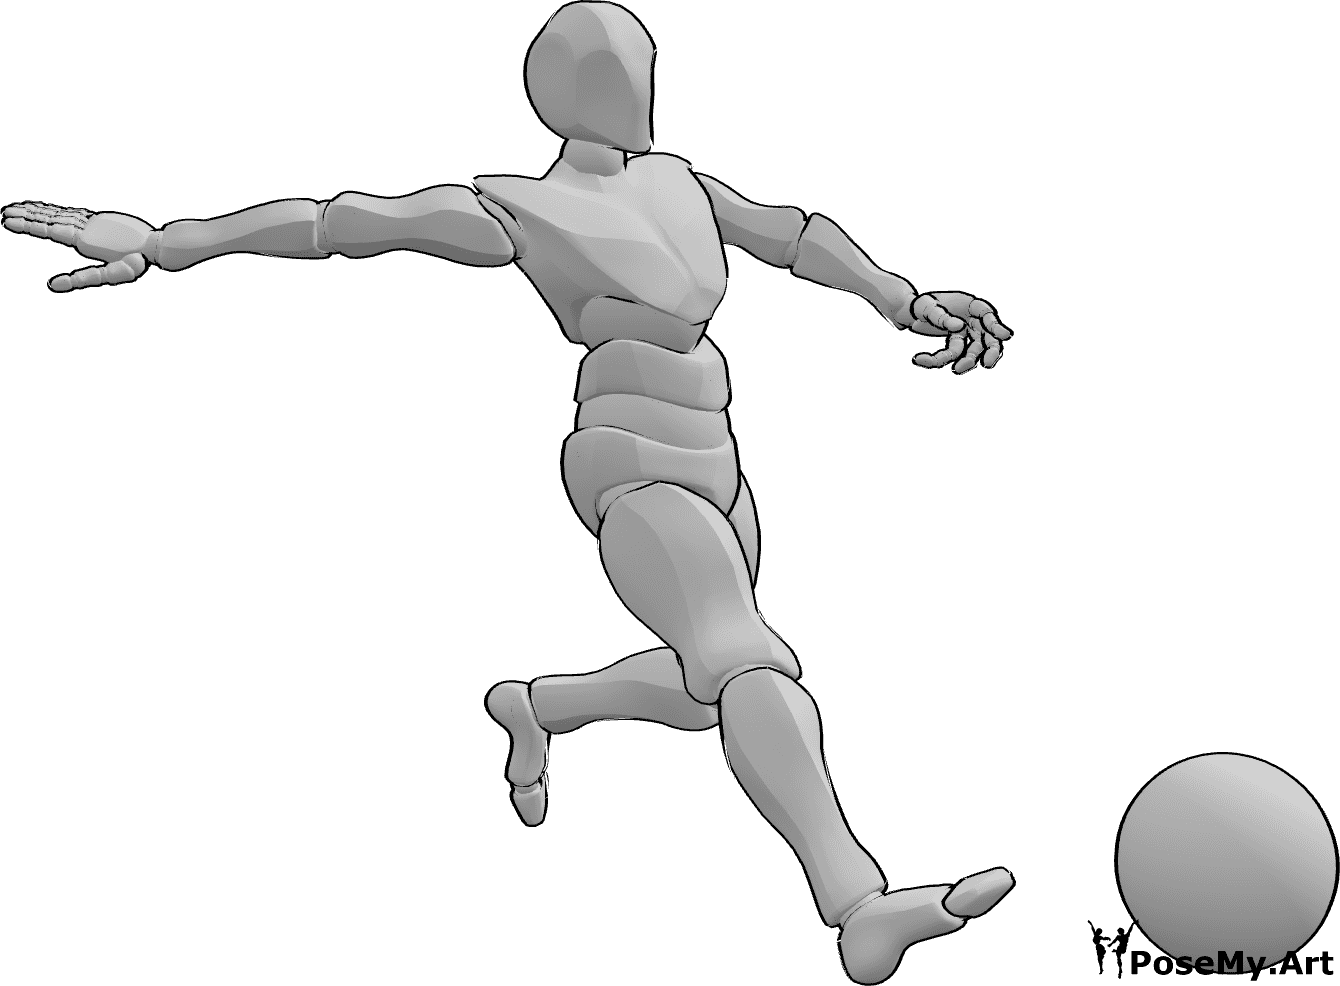 Pose Reference - Kicking soccer ball pose - Male is playing soccer, running and kicking the ball pose